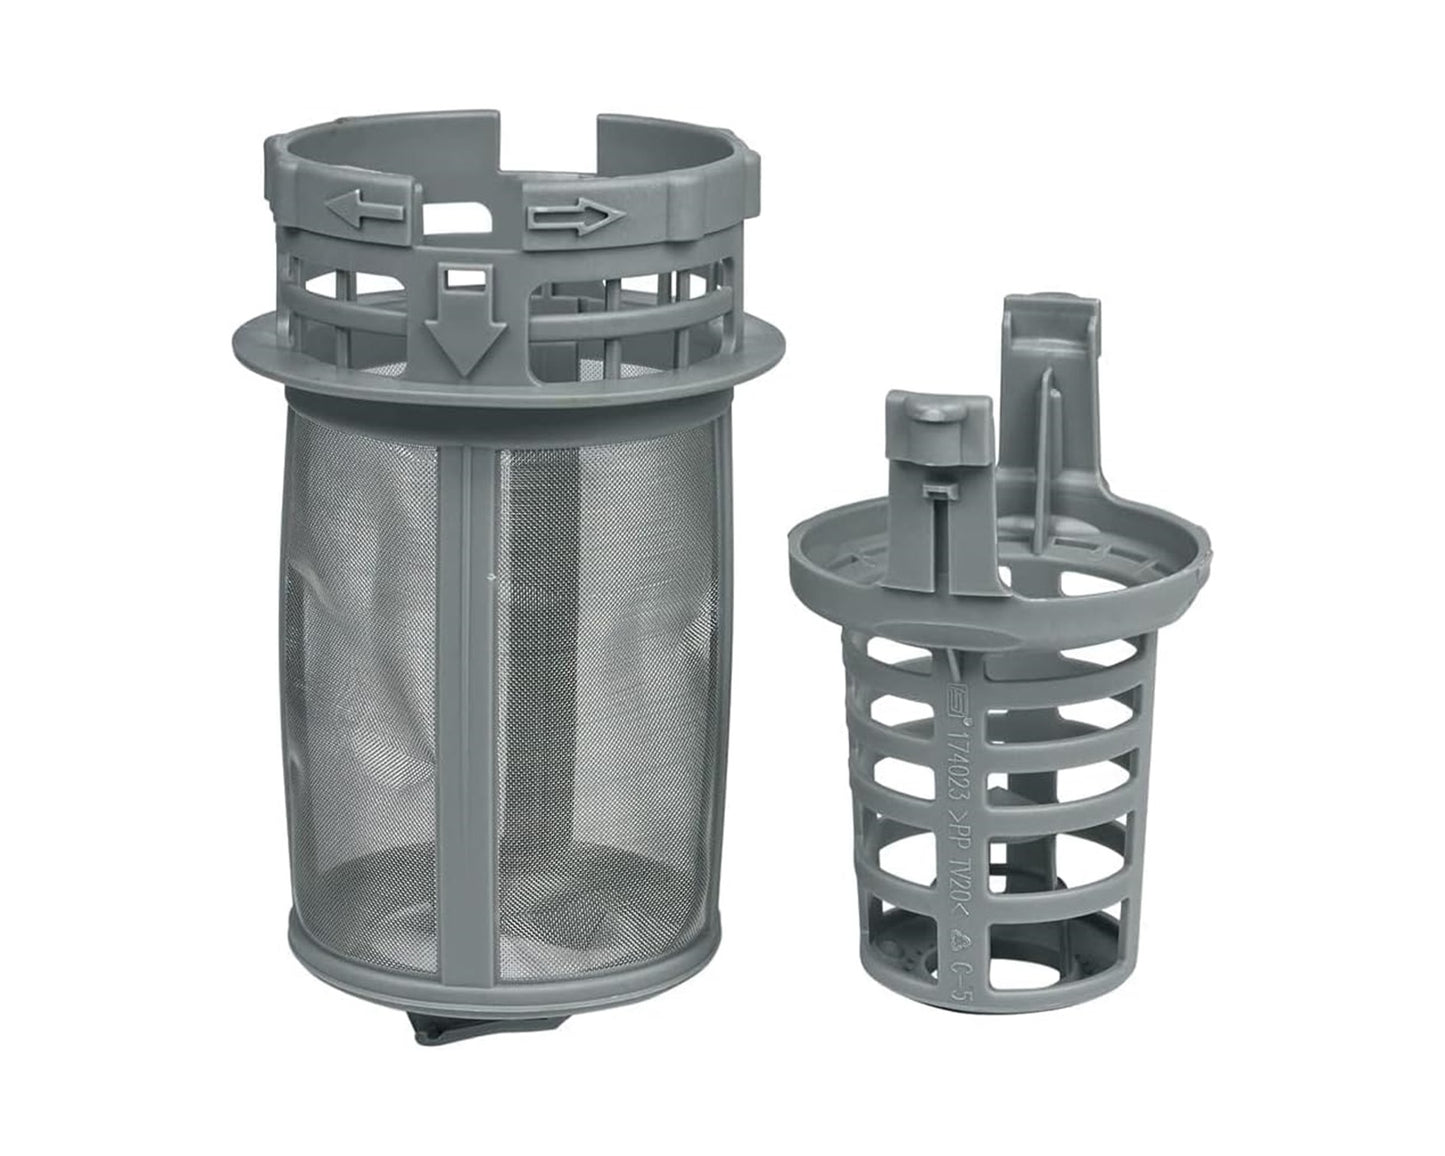 Genuine Dishwasher Bottom Drain Mesh Filter Assembley for Indesit, Hotpoint - C00345771, C00345776, ES1788040